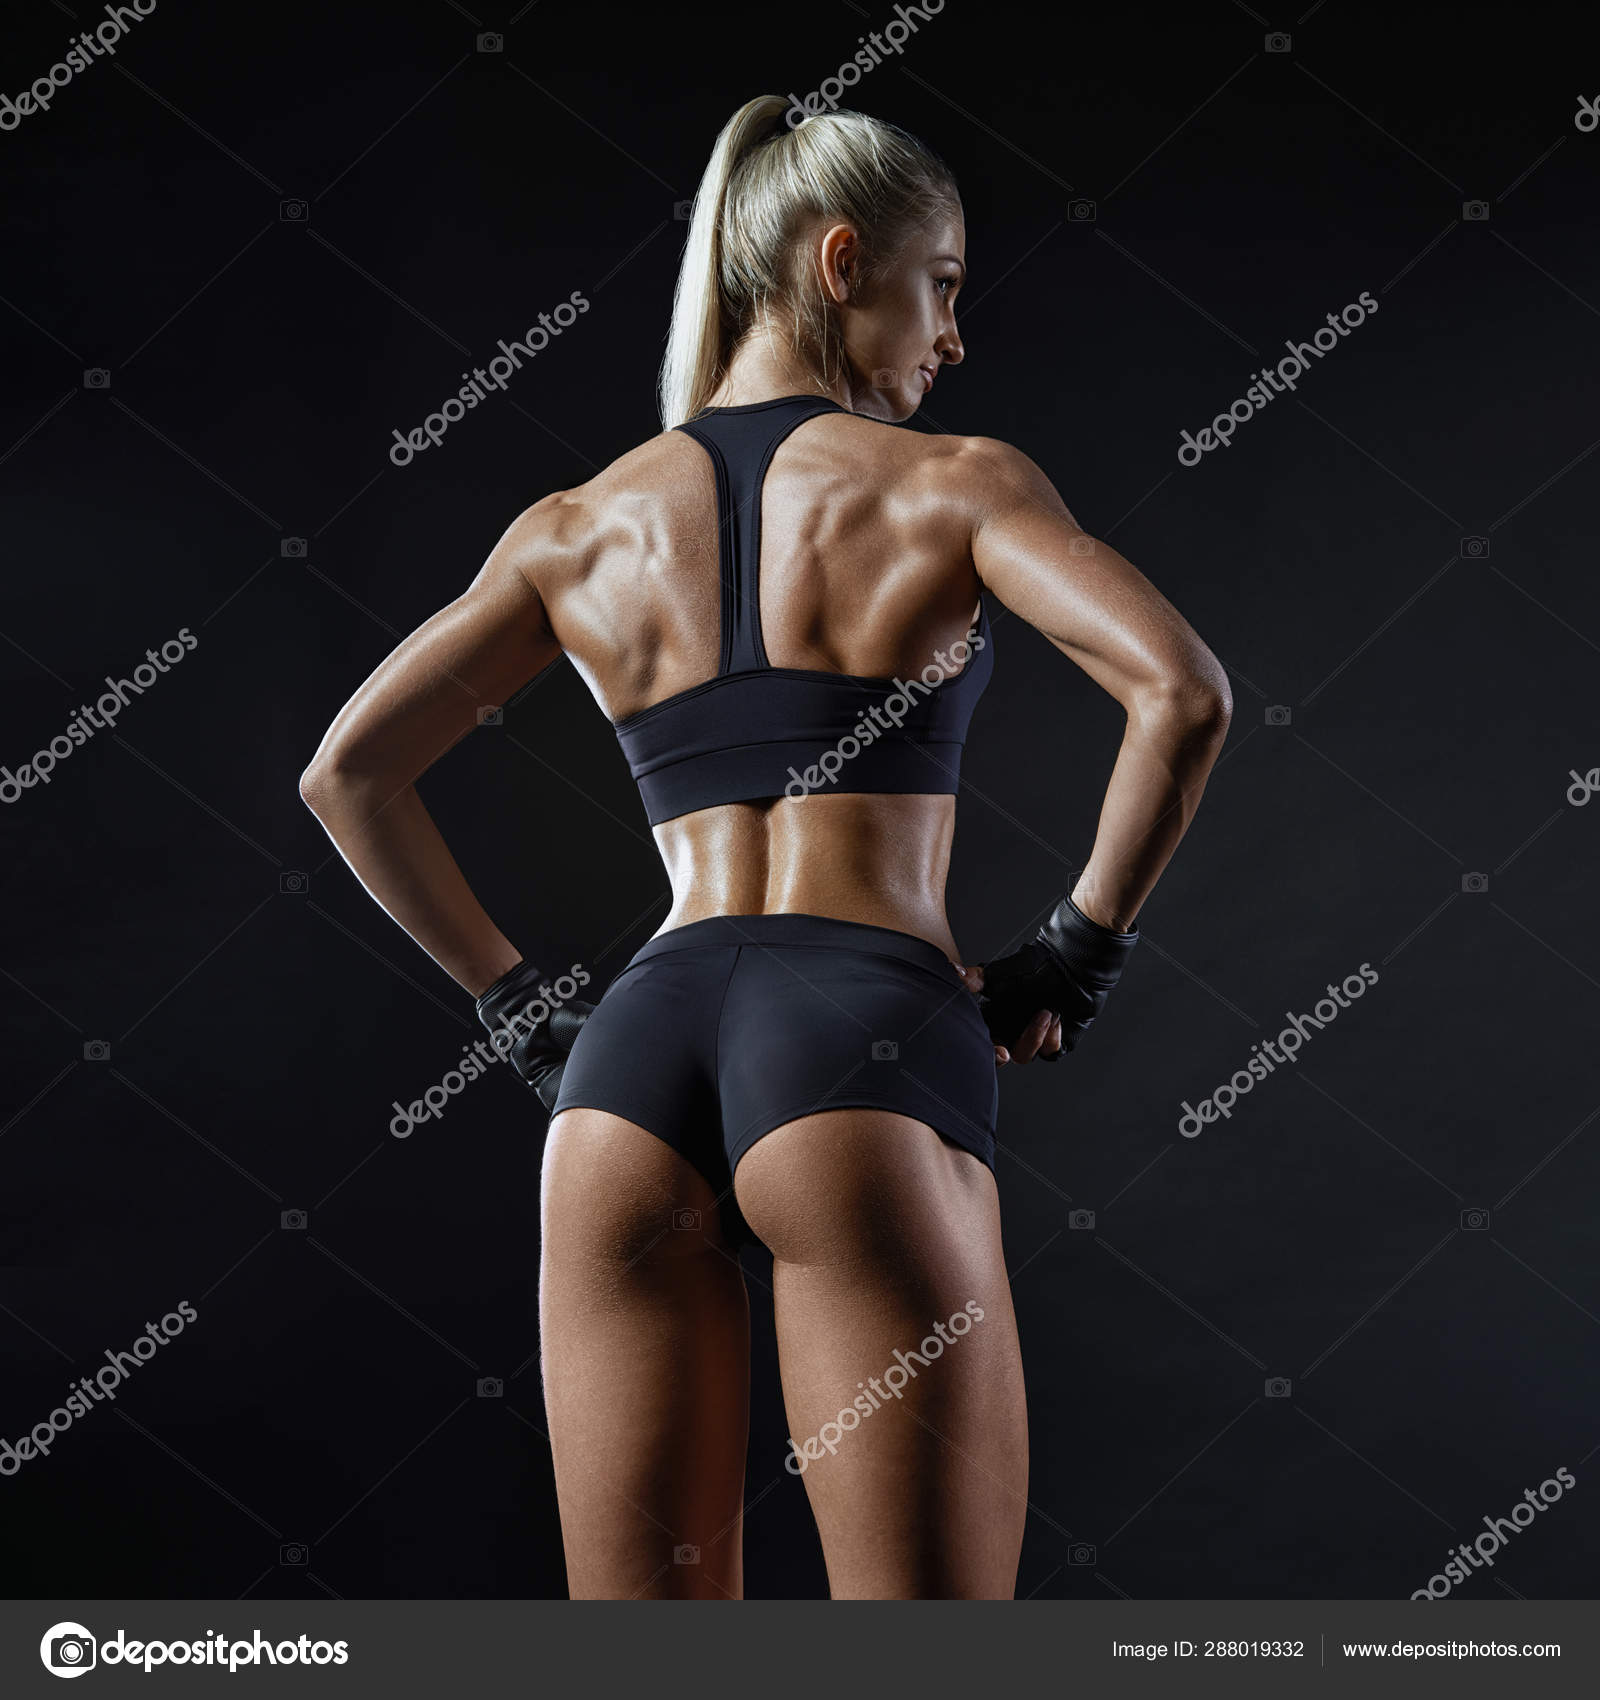 https://st4.depositphotos.com/1100414/28801/i/1600/depositphotos_288019332-stock-photo-fitness-model-turned-back-with.jpg